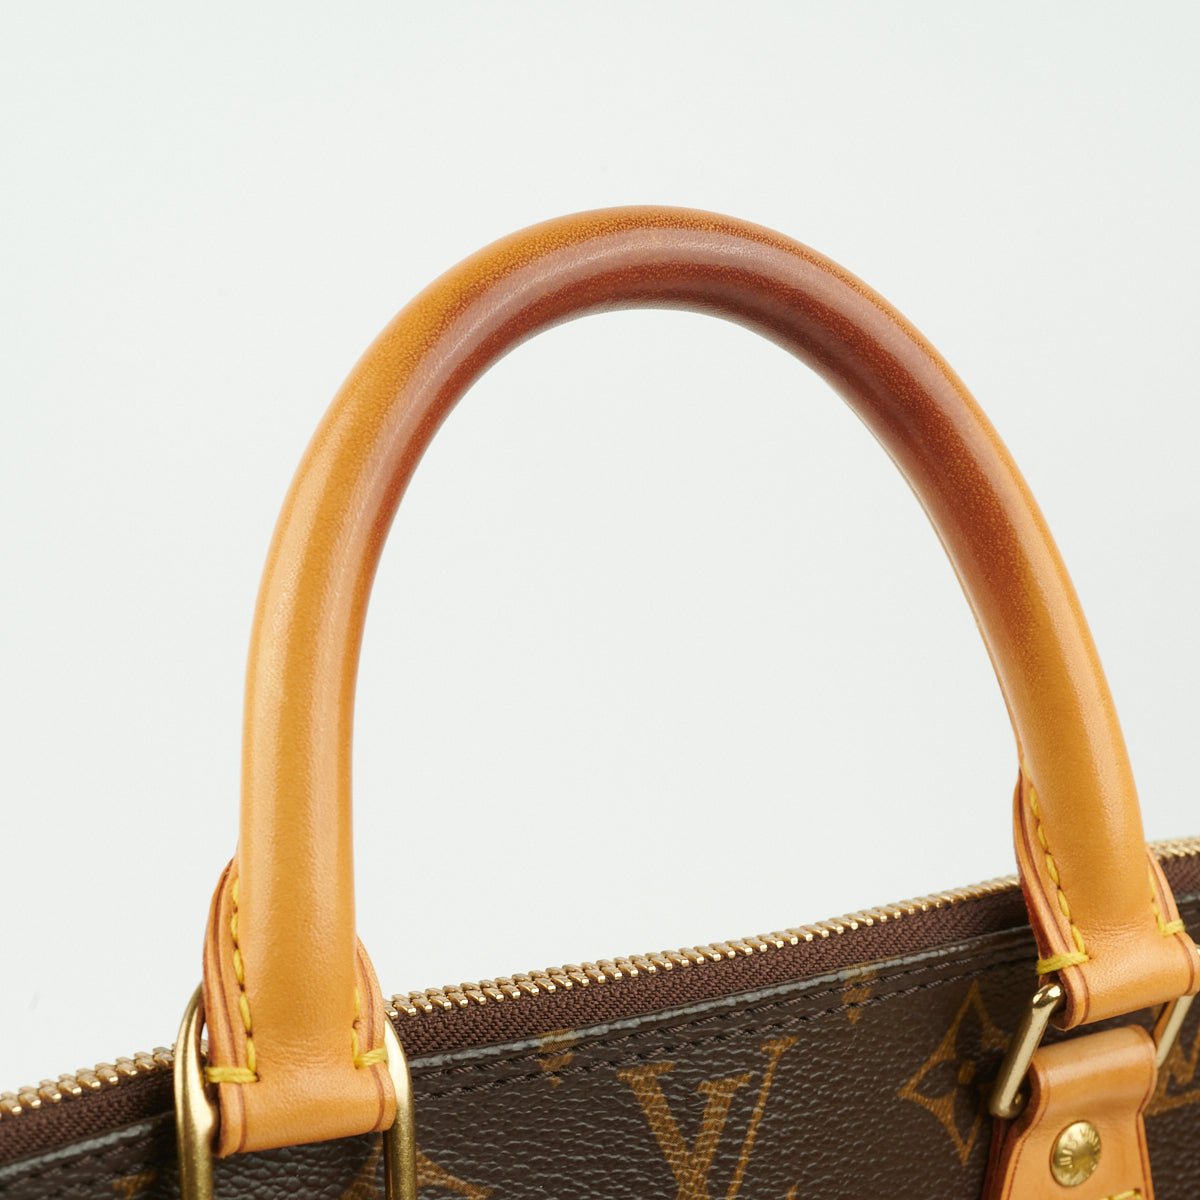 M20355 Louis Vuitton Monogram Lace Alma PM Handbag